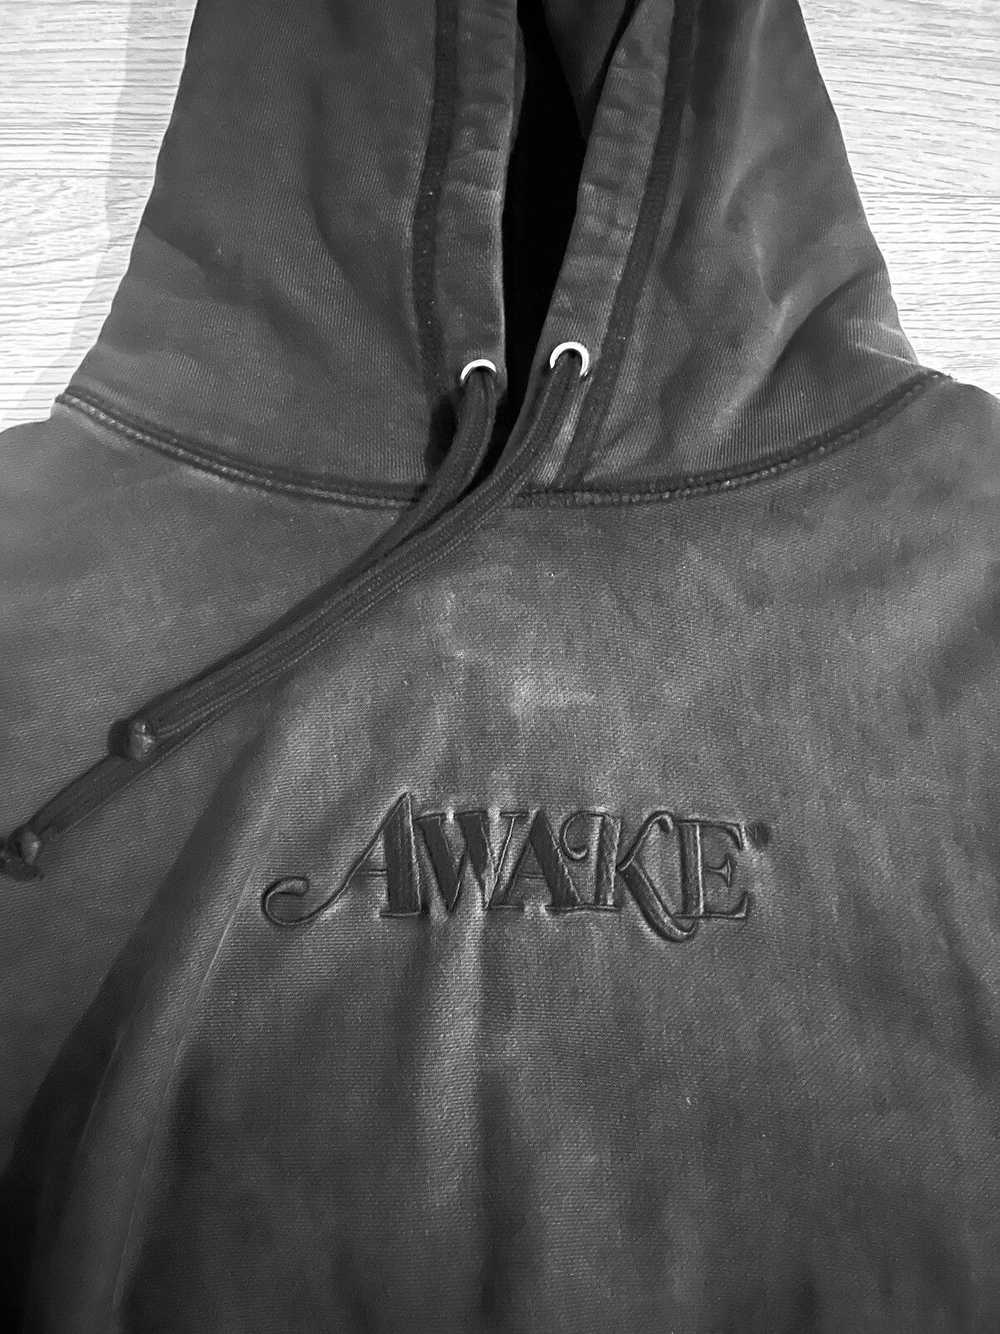 Awake Awake NY Triple Black Logo Hoody - image 2